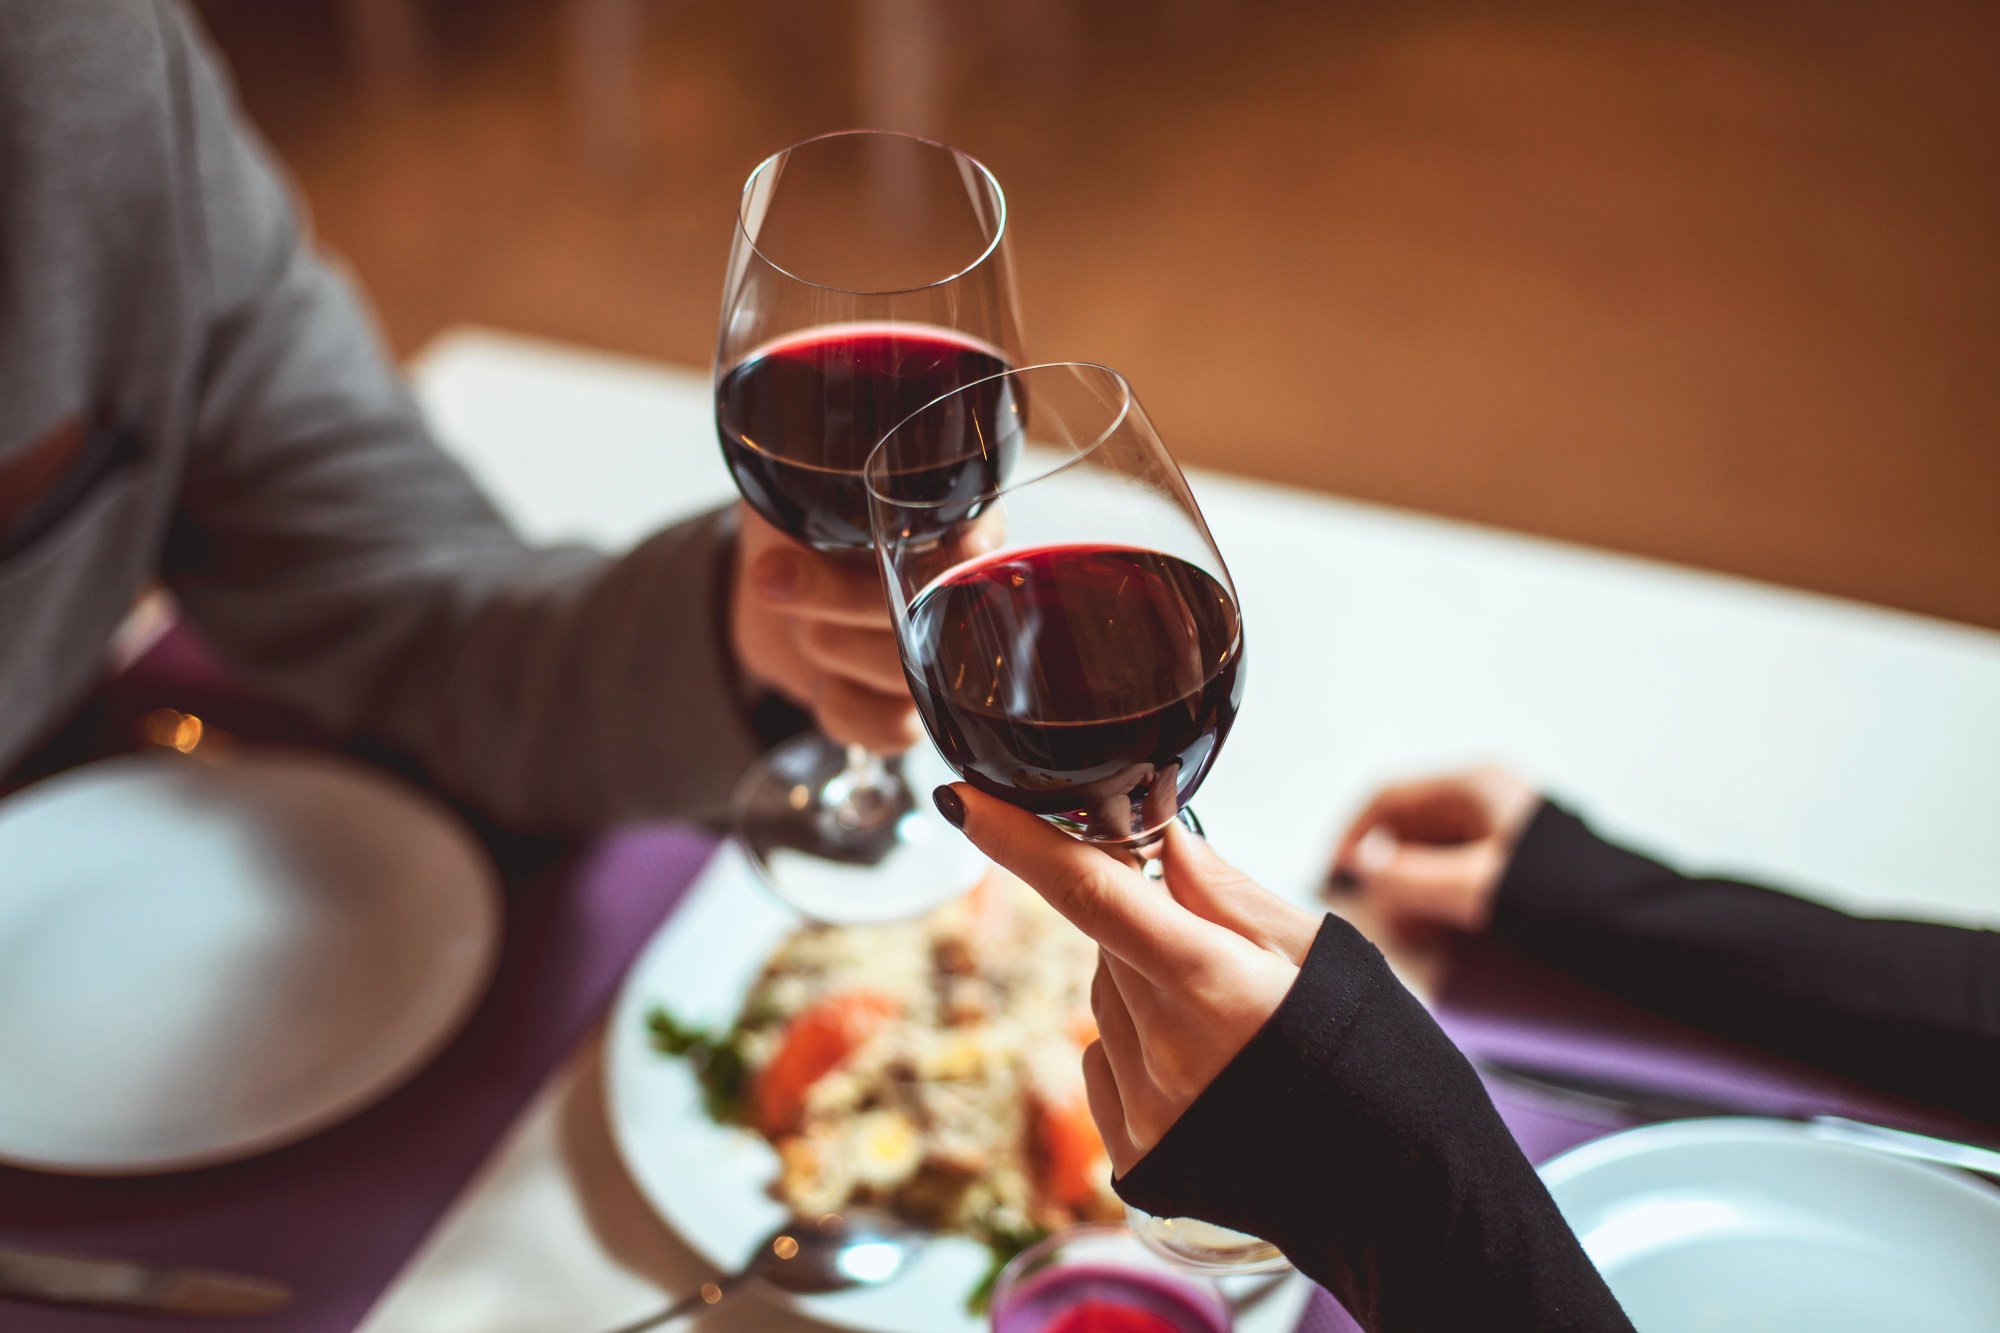 Бокал вина на столе. Бокал вина. Бокал вина на столе в ресторане. Бокал красного вина. Романтический ужин в ресторане.